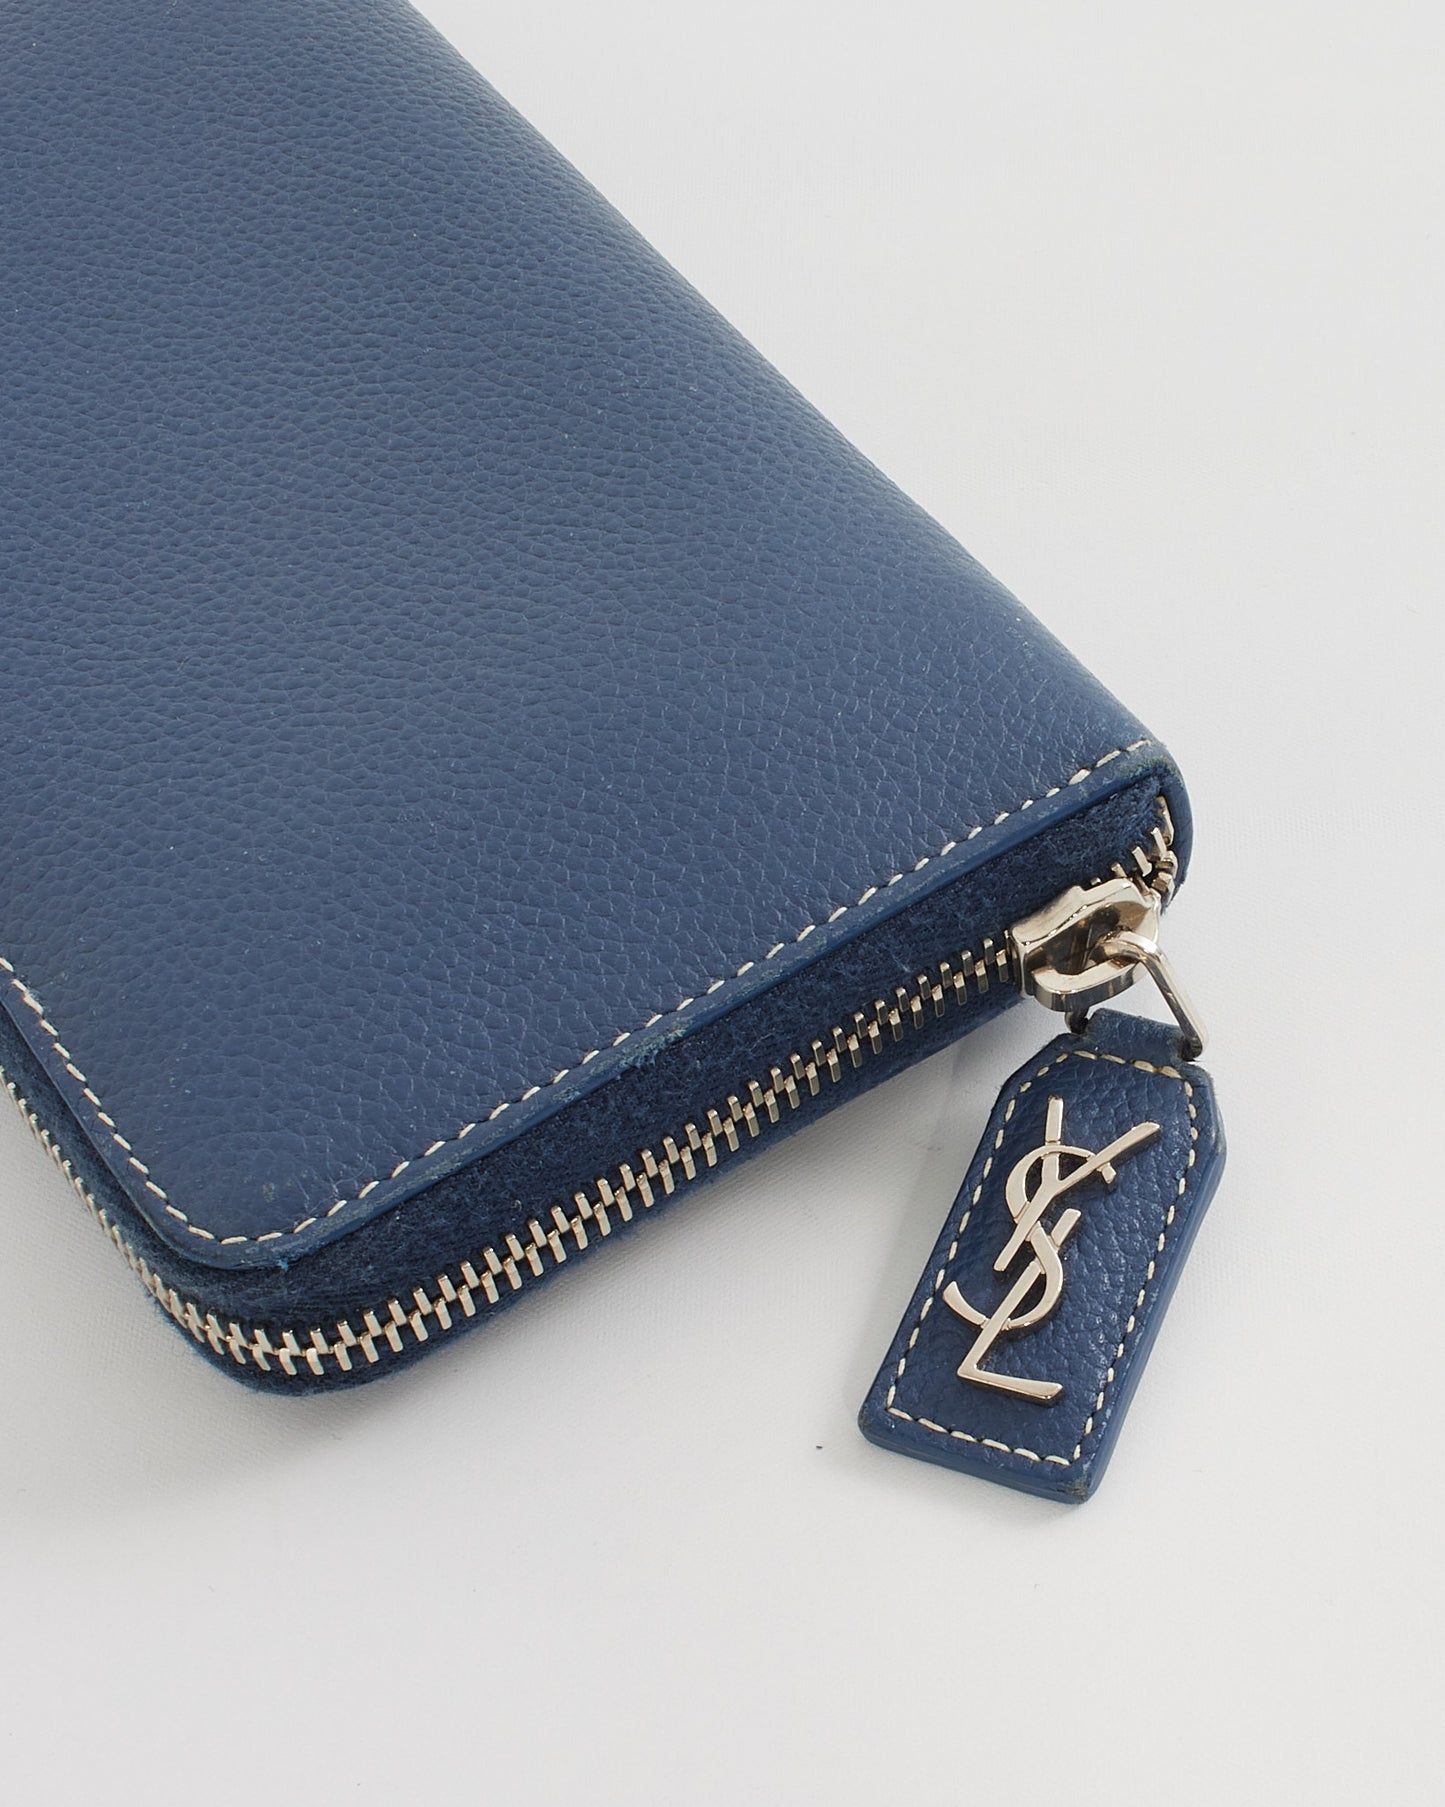 Saint Laurent Blue Grained Leather Rive Gauche Continental Zip Around Wallet